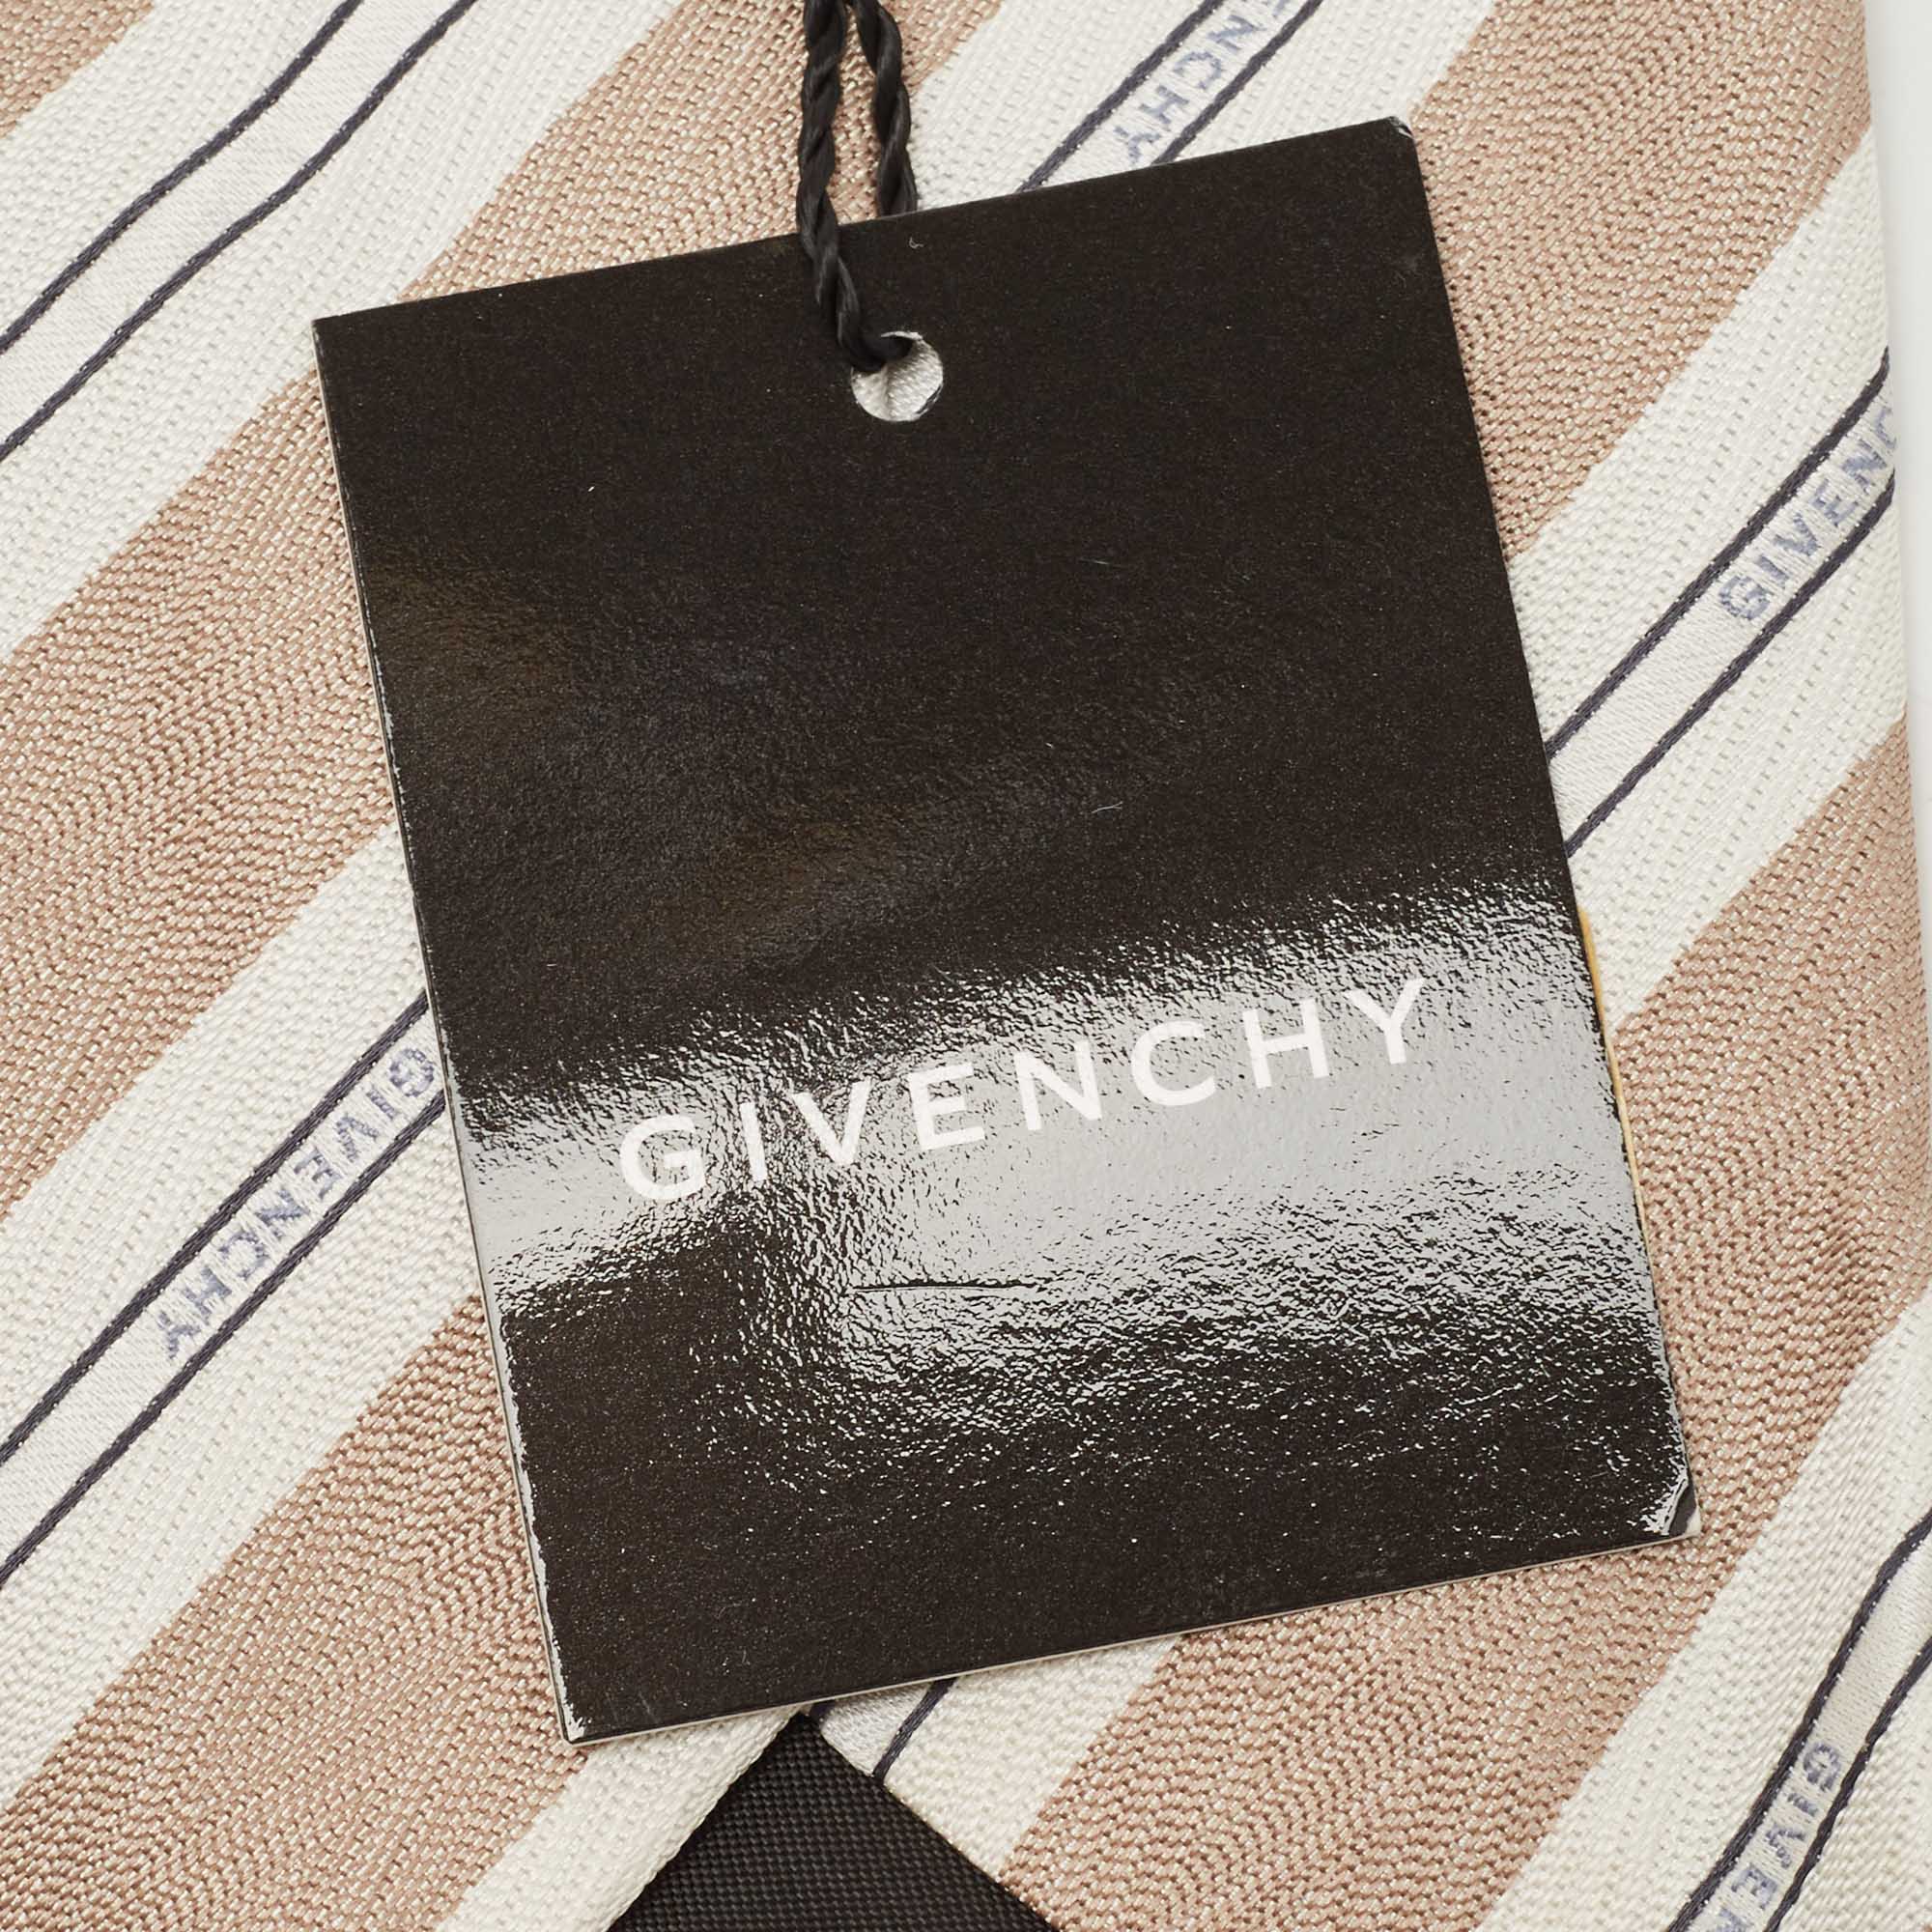 Givenchy Beige Logo Diagonal Striped Silk Tie